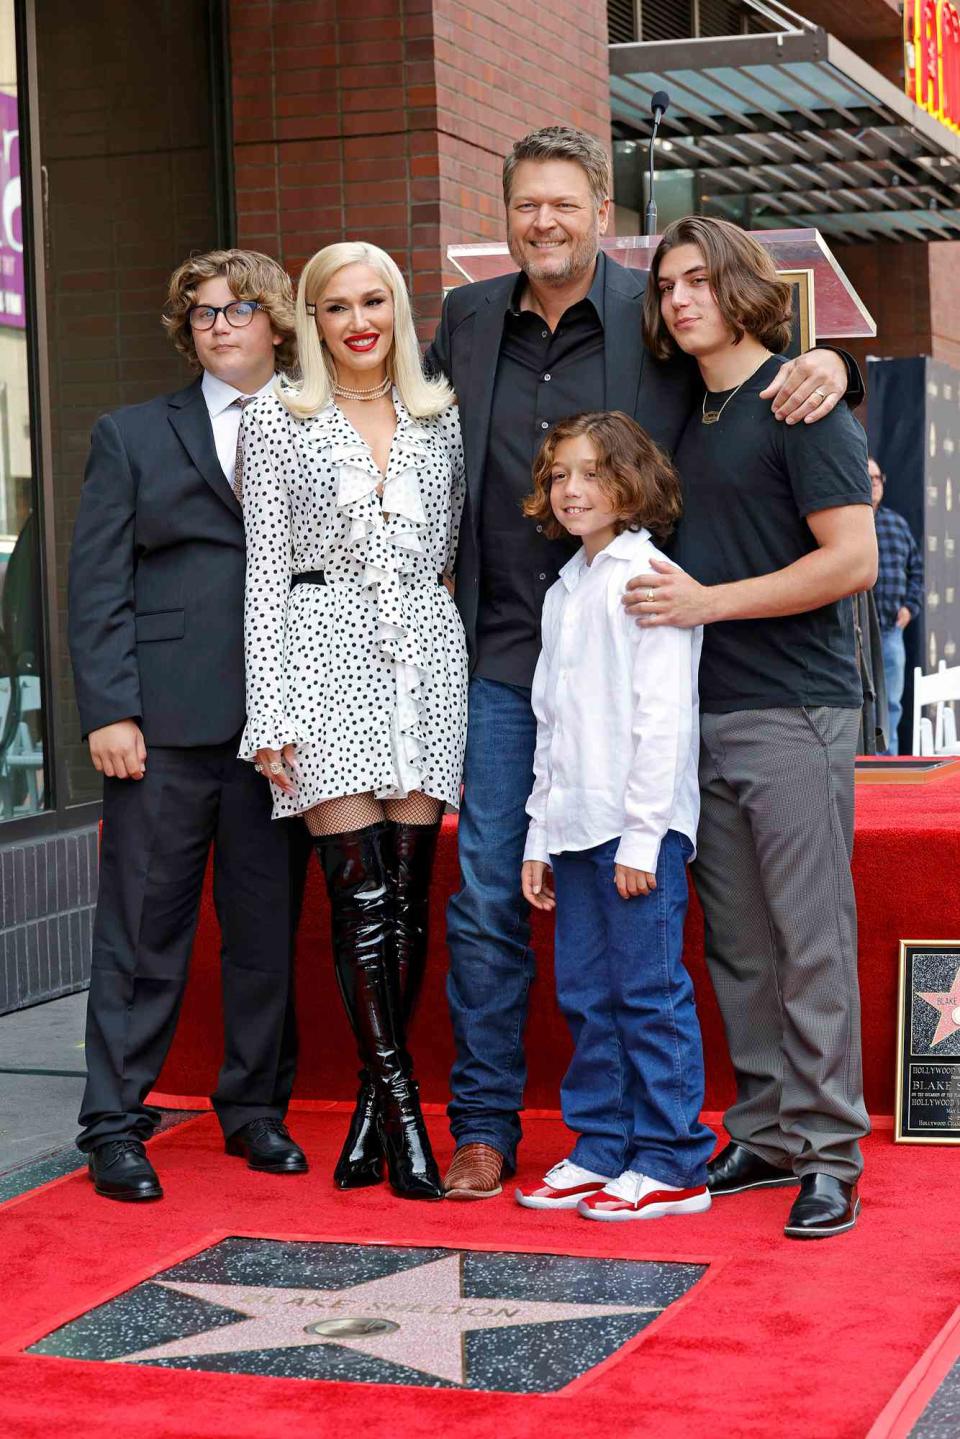 Frazer Harrison/Getty Blake Shelton, Gwen Stefani and her sons Kingston, Zuma and Apollo